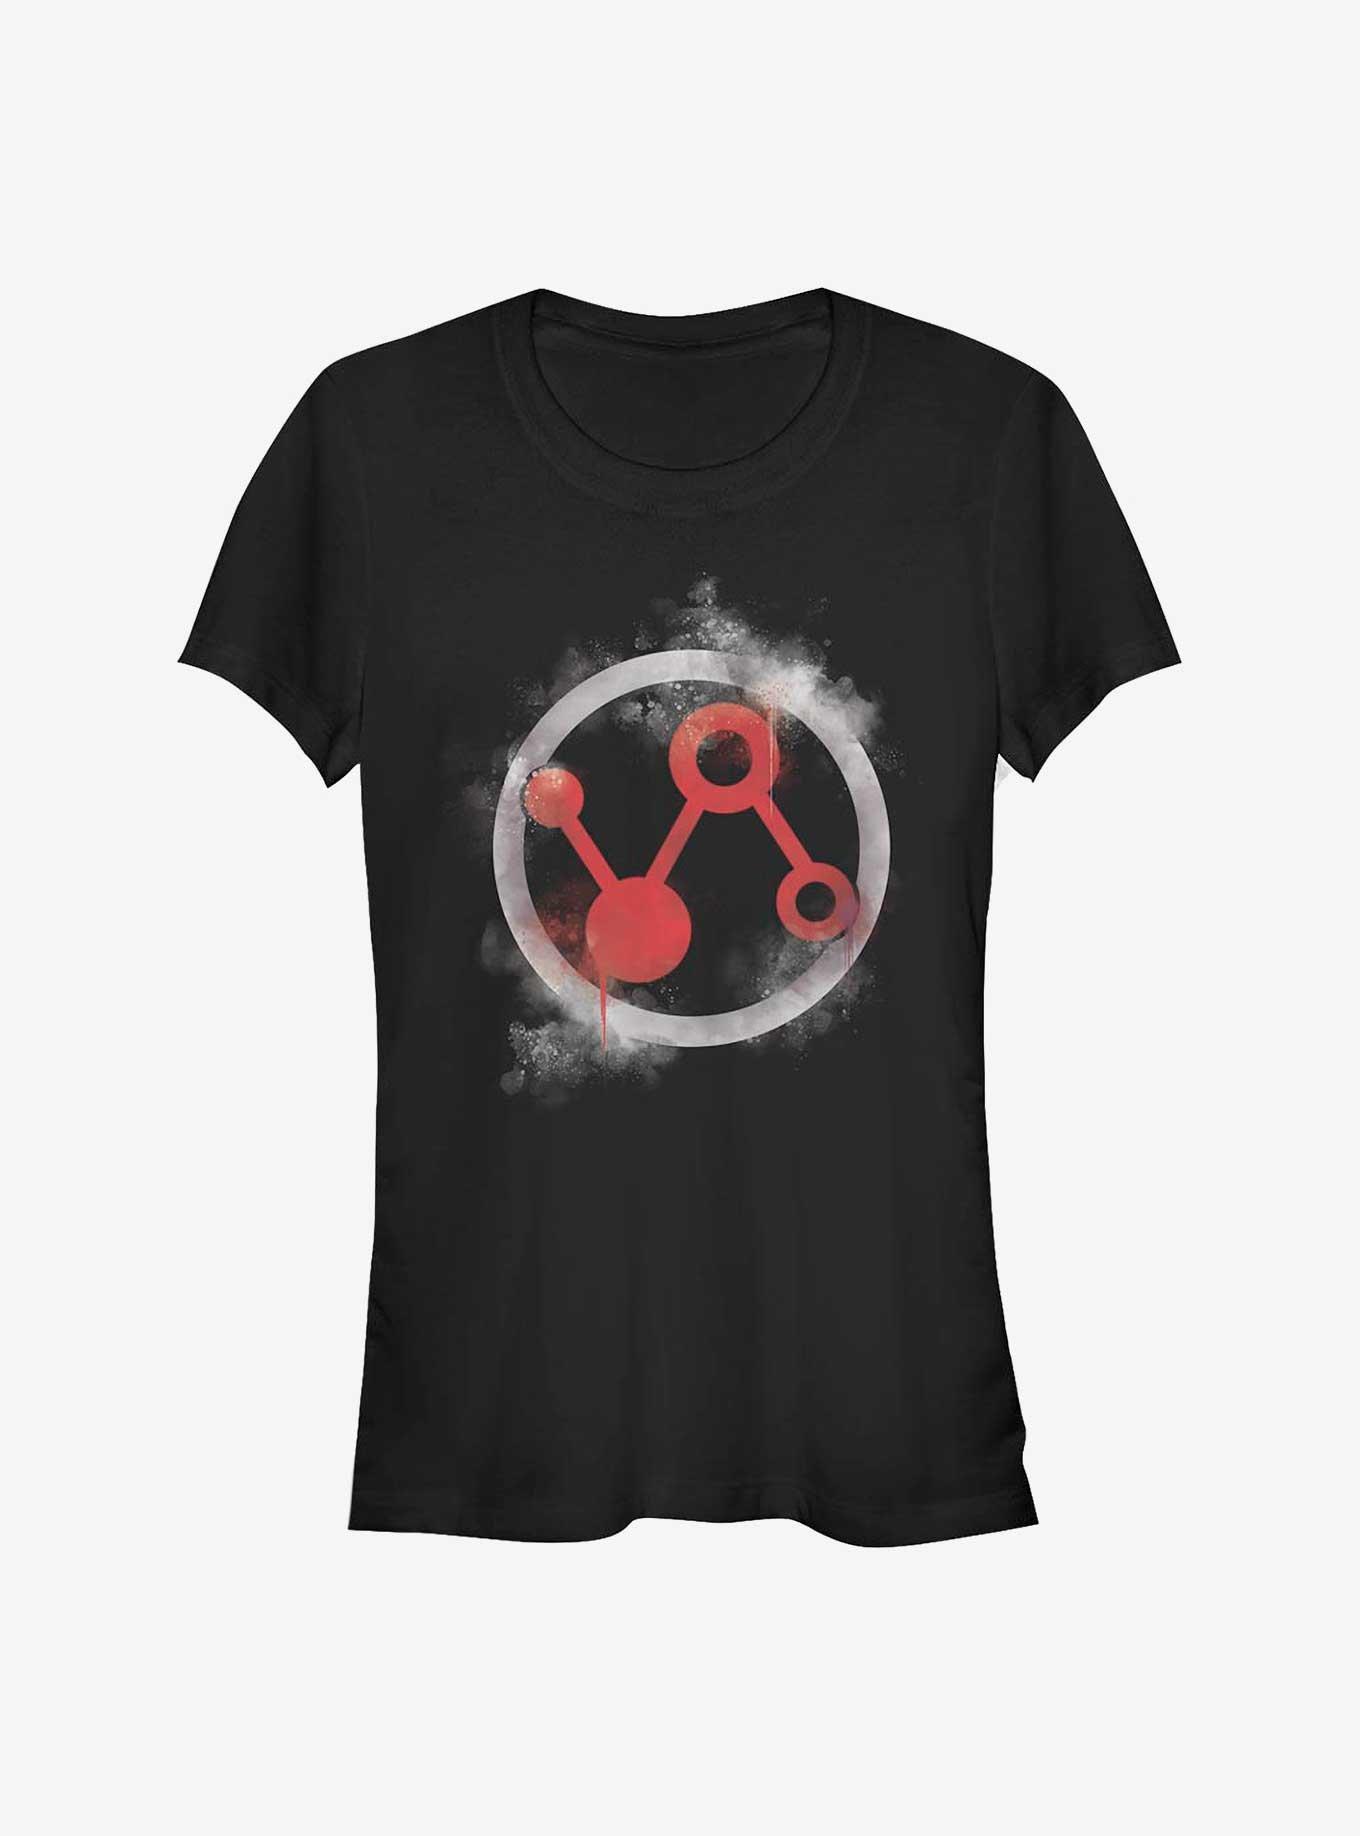 Marvel Ant-Man Pym Particle Spray Logo Girls T-Shirt